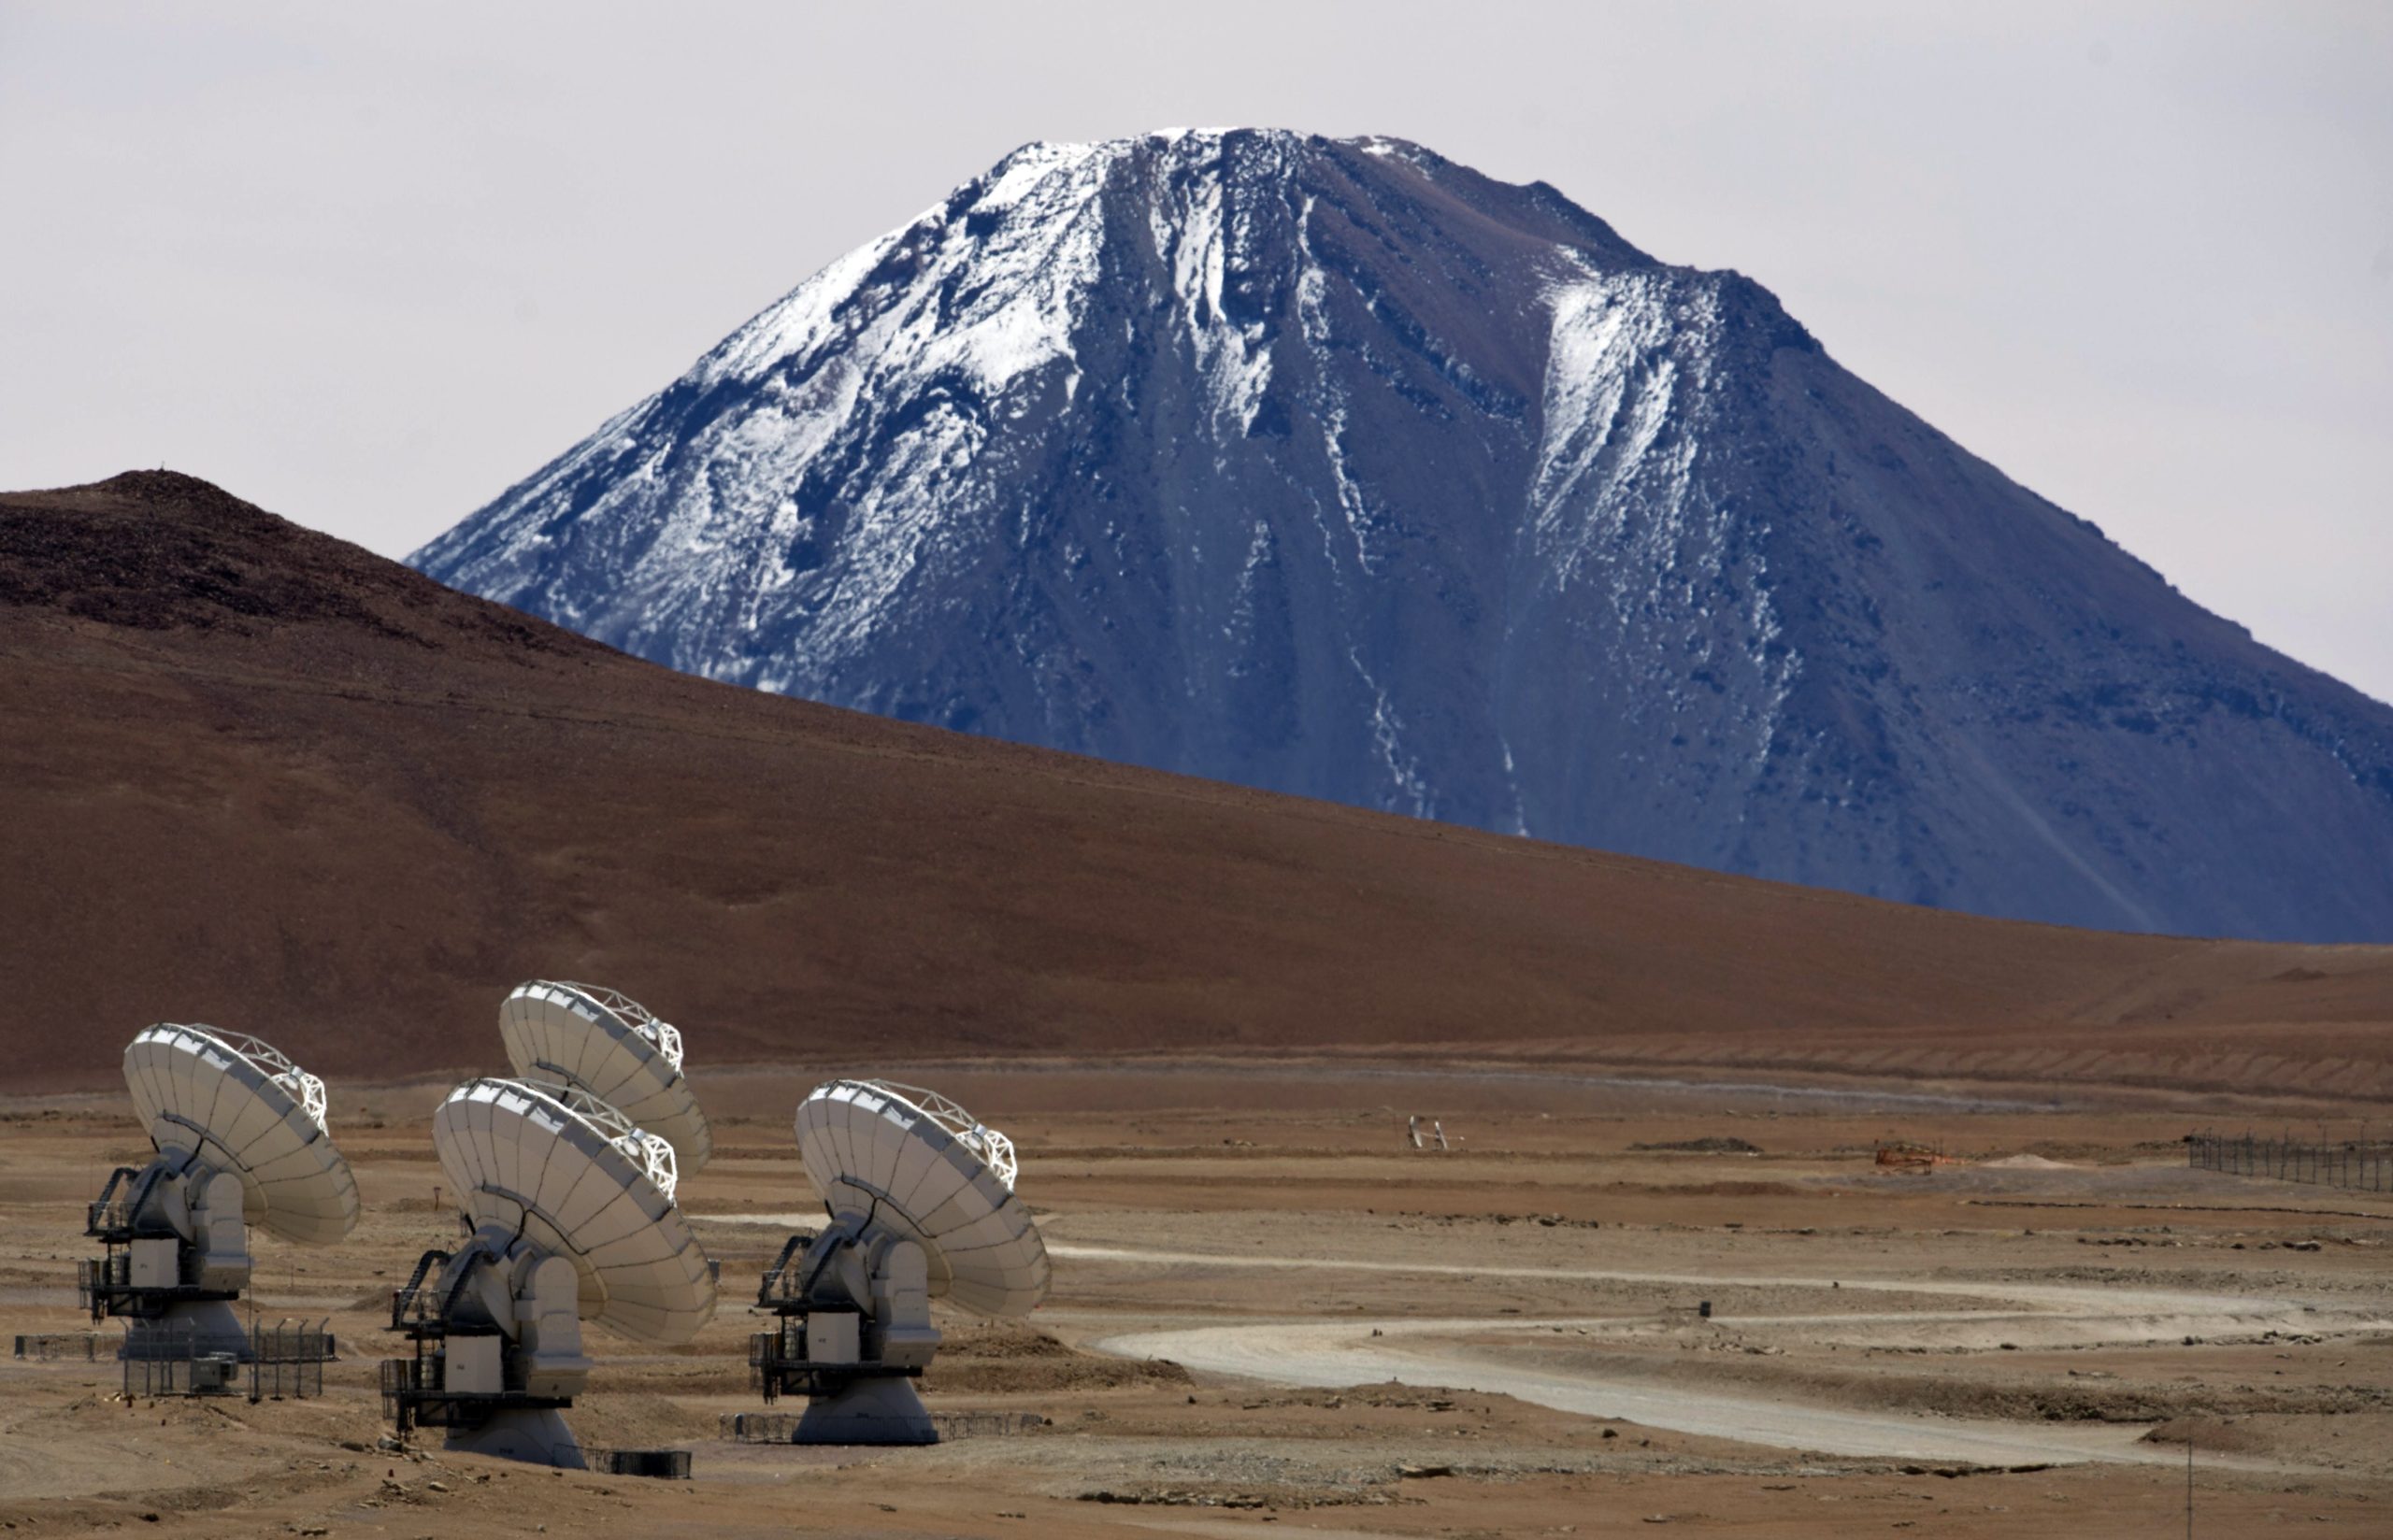 Part of the ALMA telescope in Chile's Atacama Desert. (Photo: MARTIN BERNETTI/AFP, Getty Images)